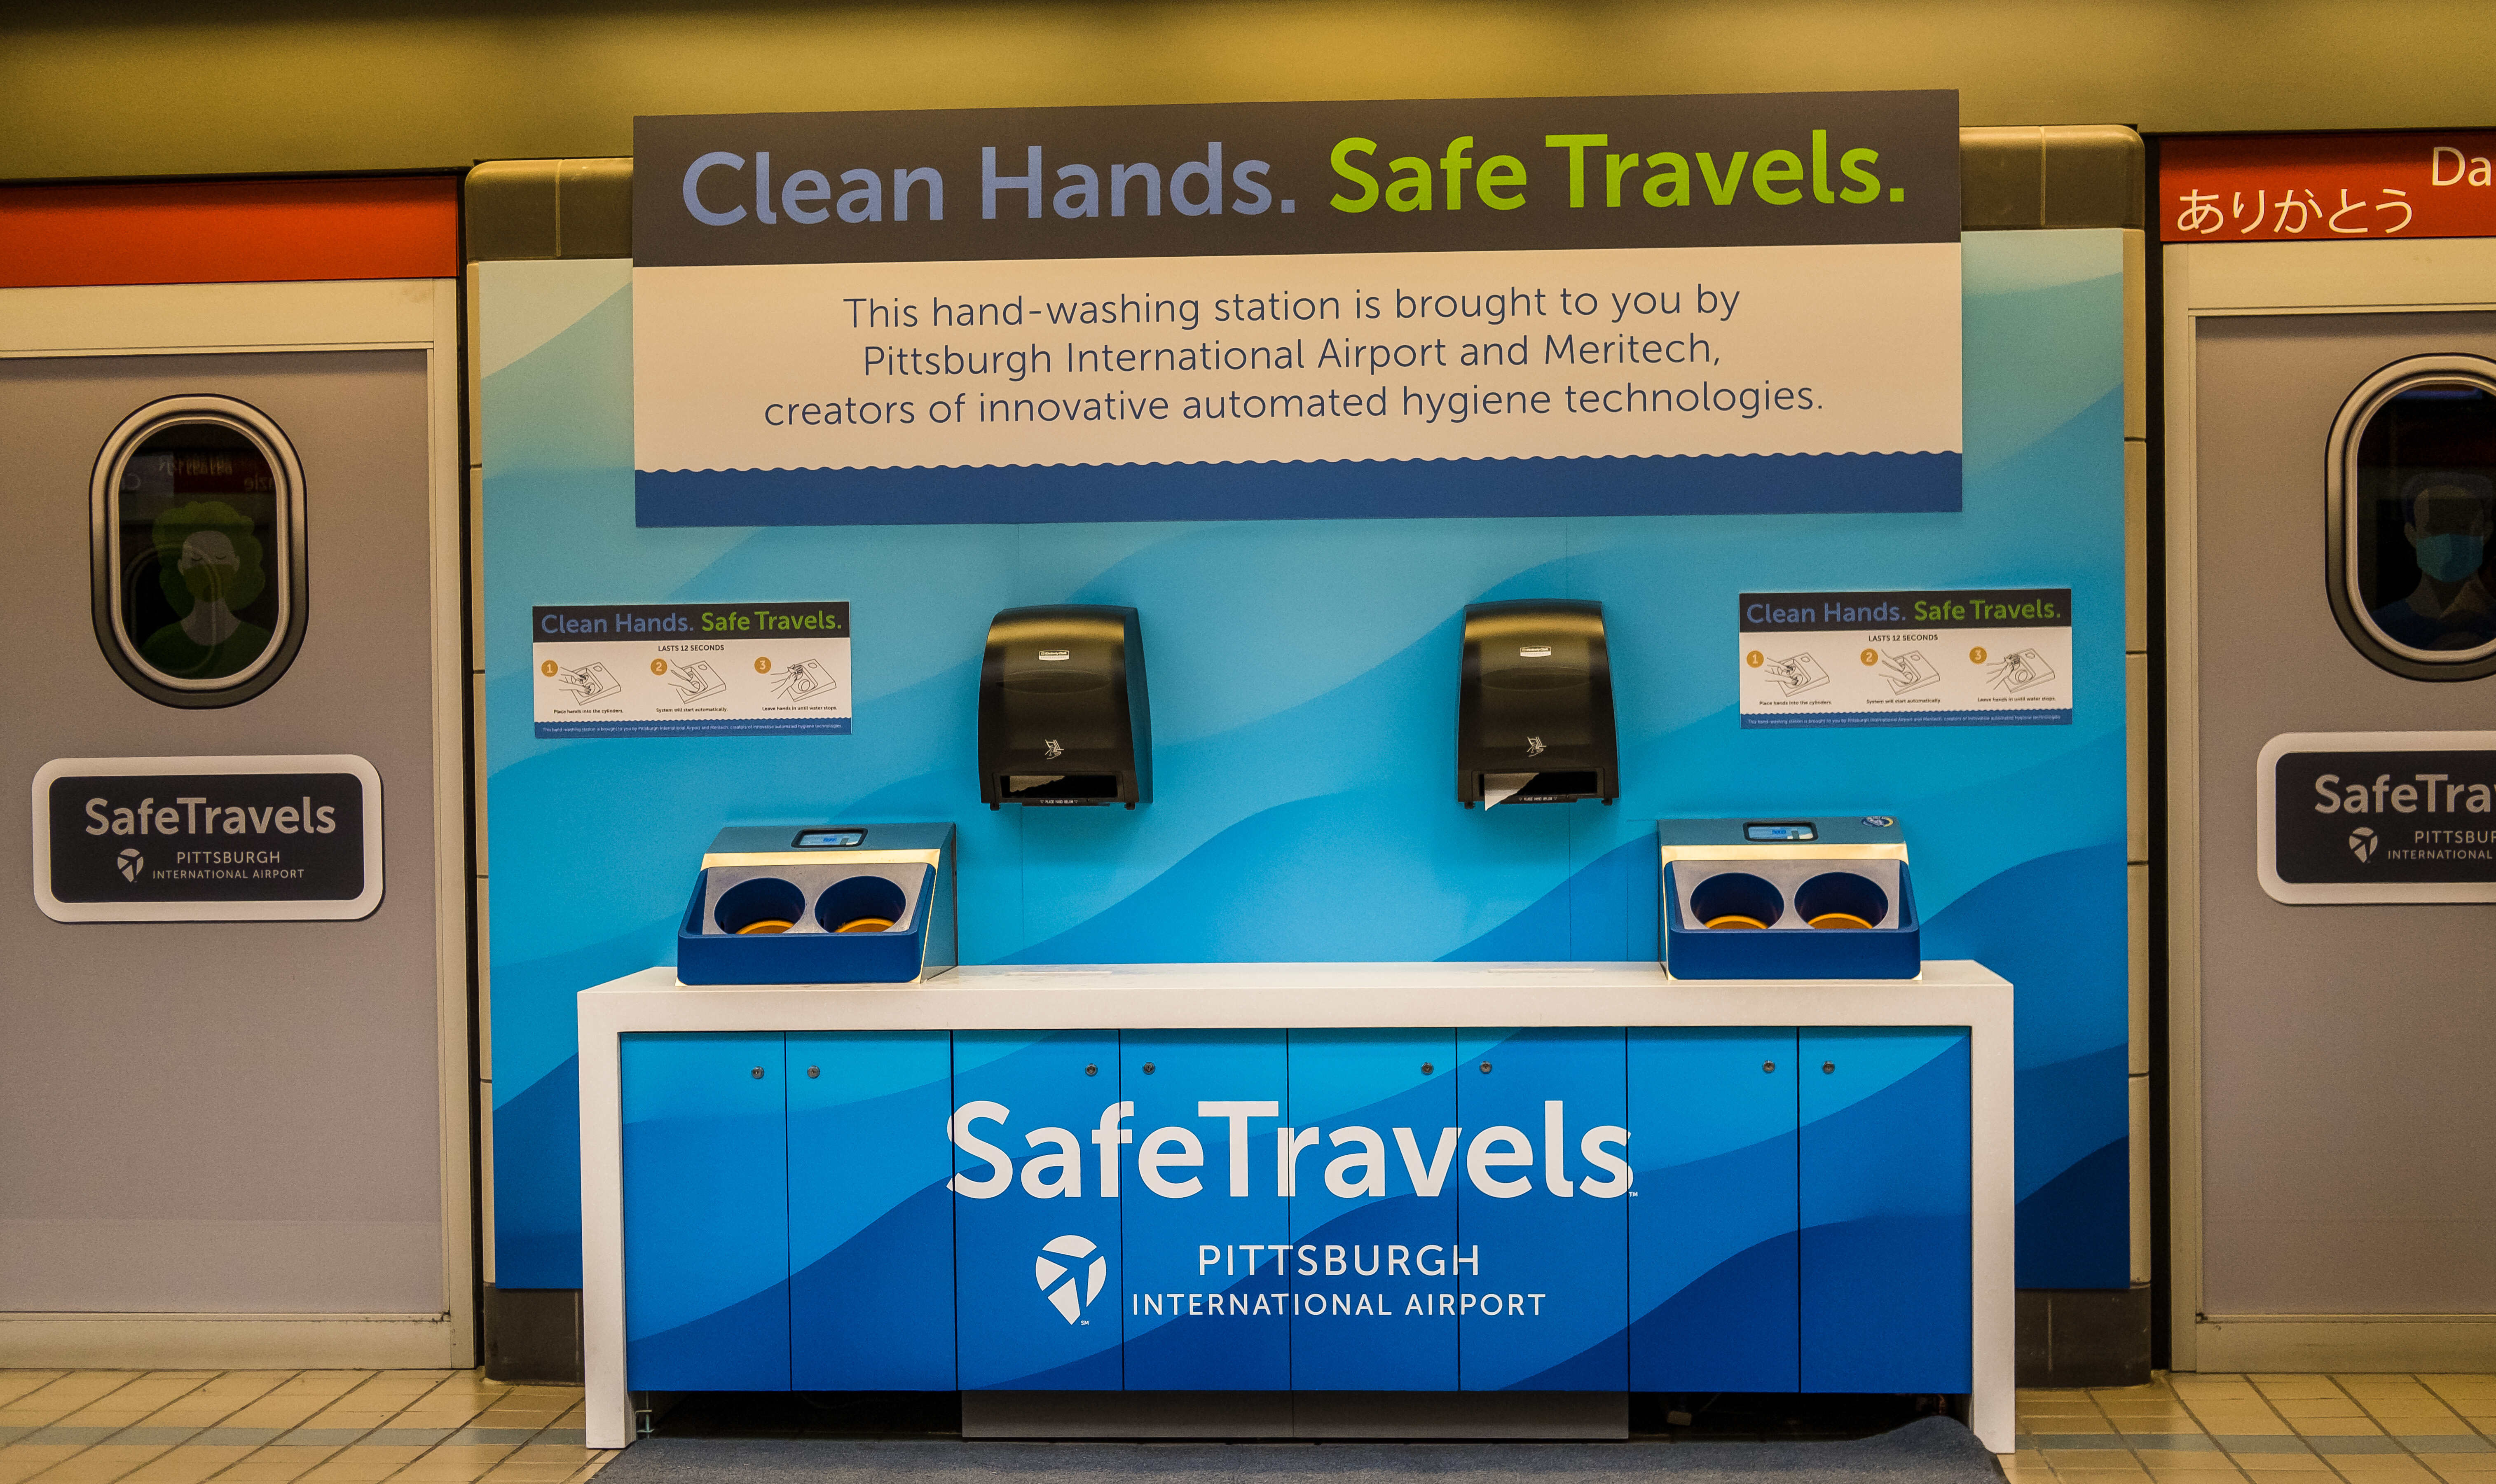 Meritech Automated Handwashing Stations Make Travel Safer at Pittsburgh International Airport